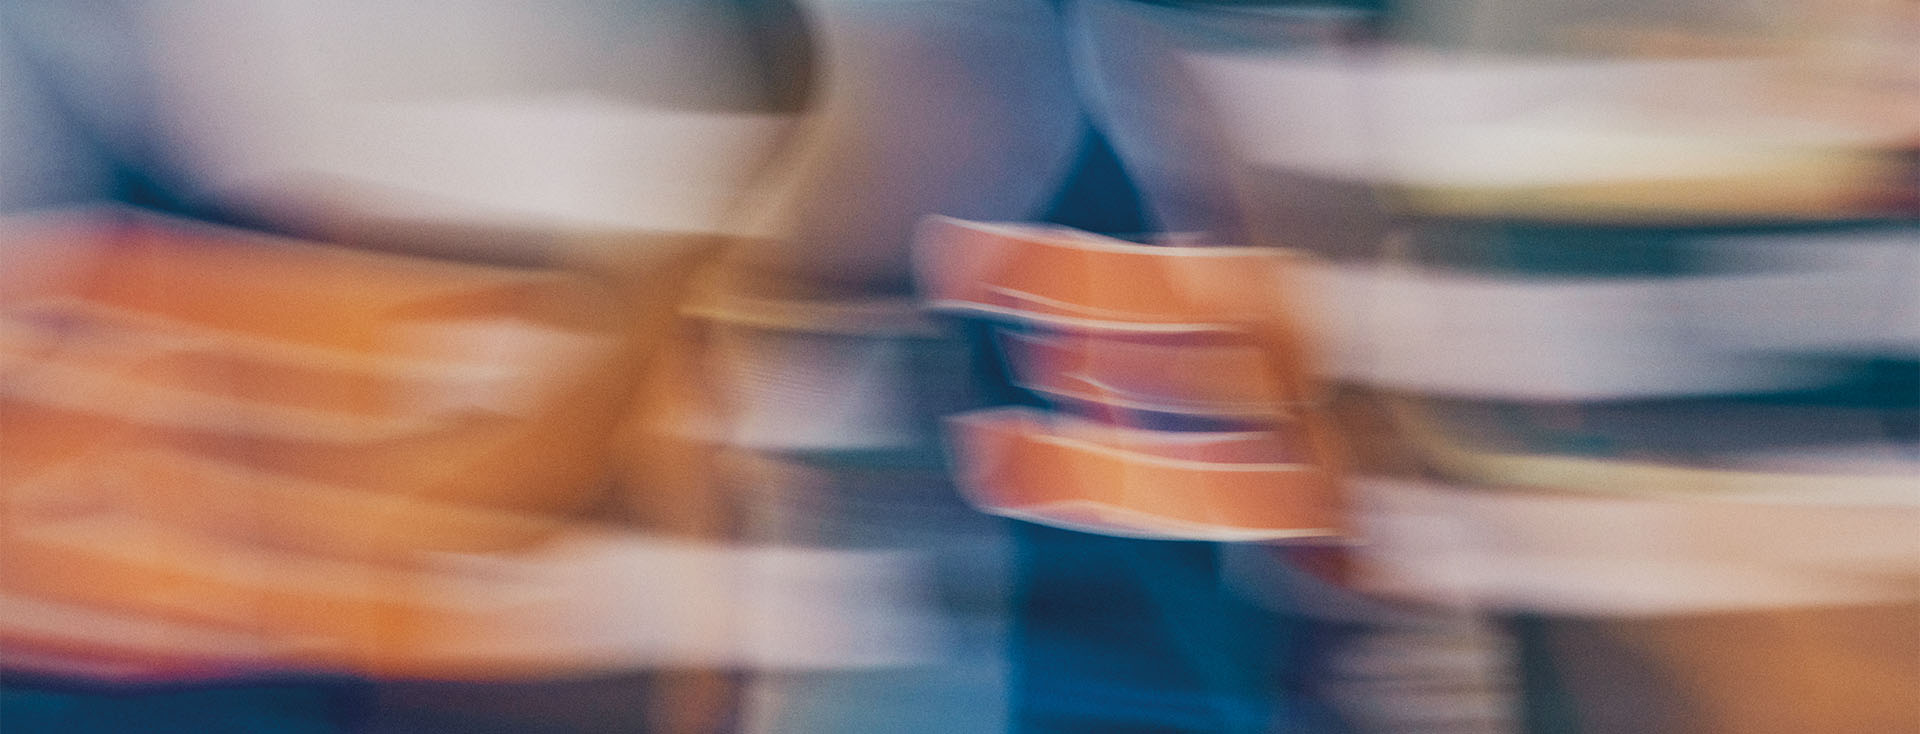 Basketball shirt in a motion blur (Photo)